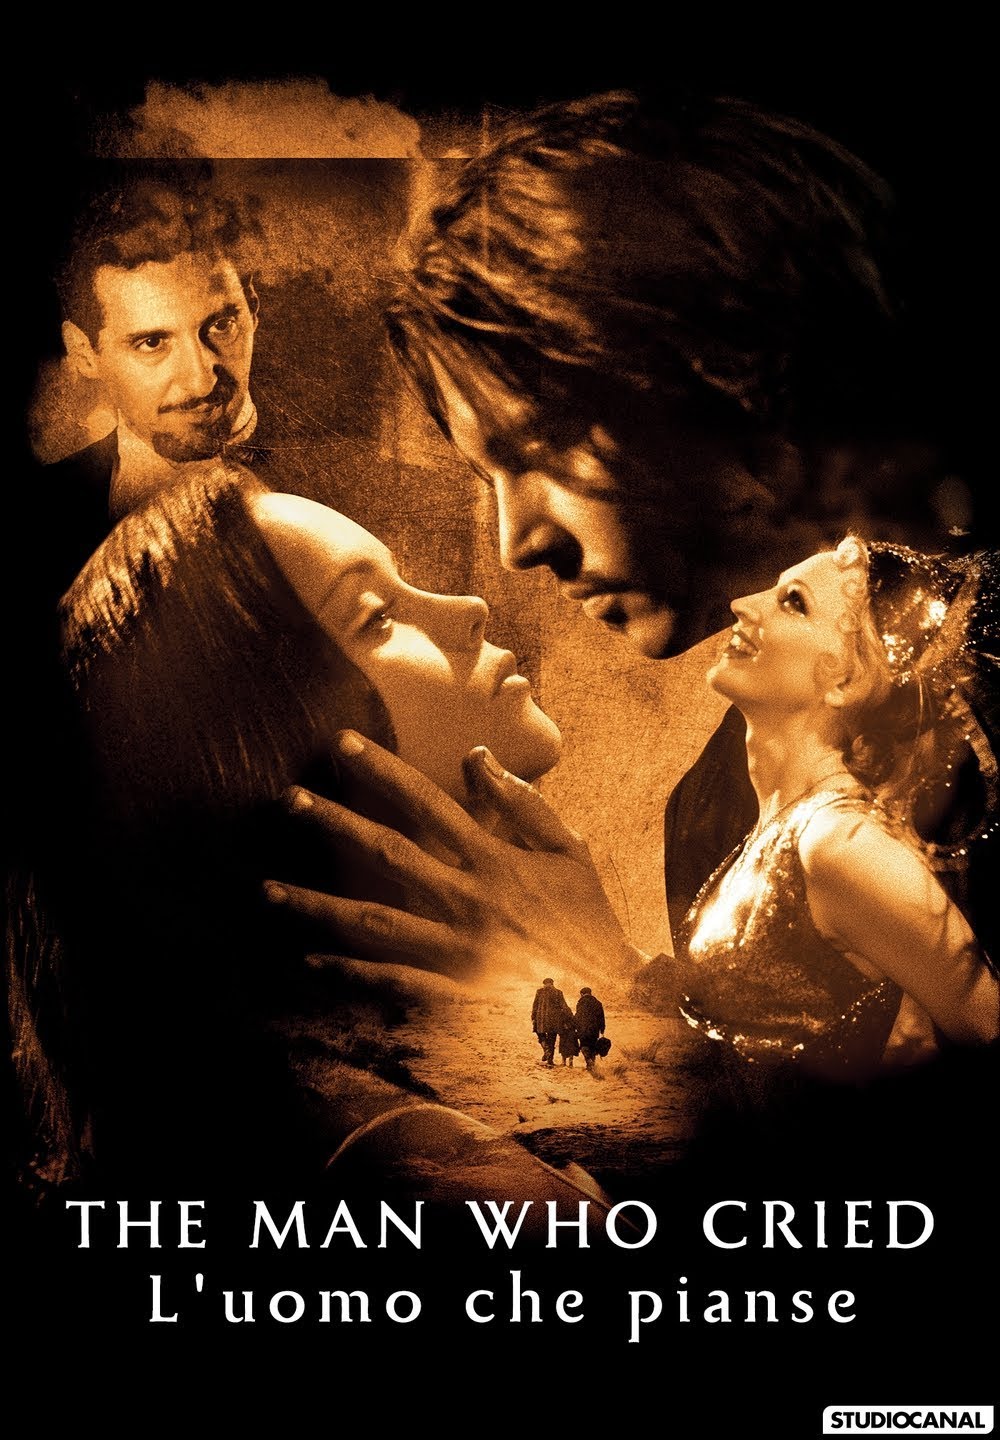 The Man Who Cried – L’uomo che pianse [HD] (2000)